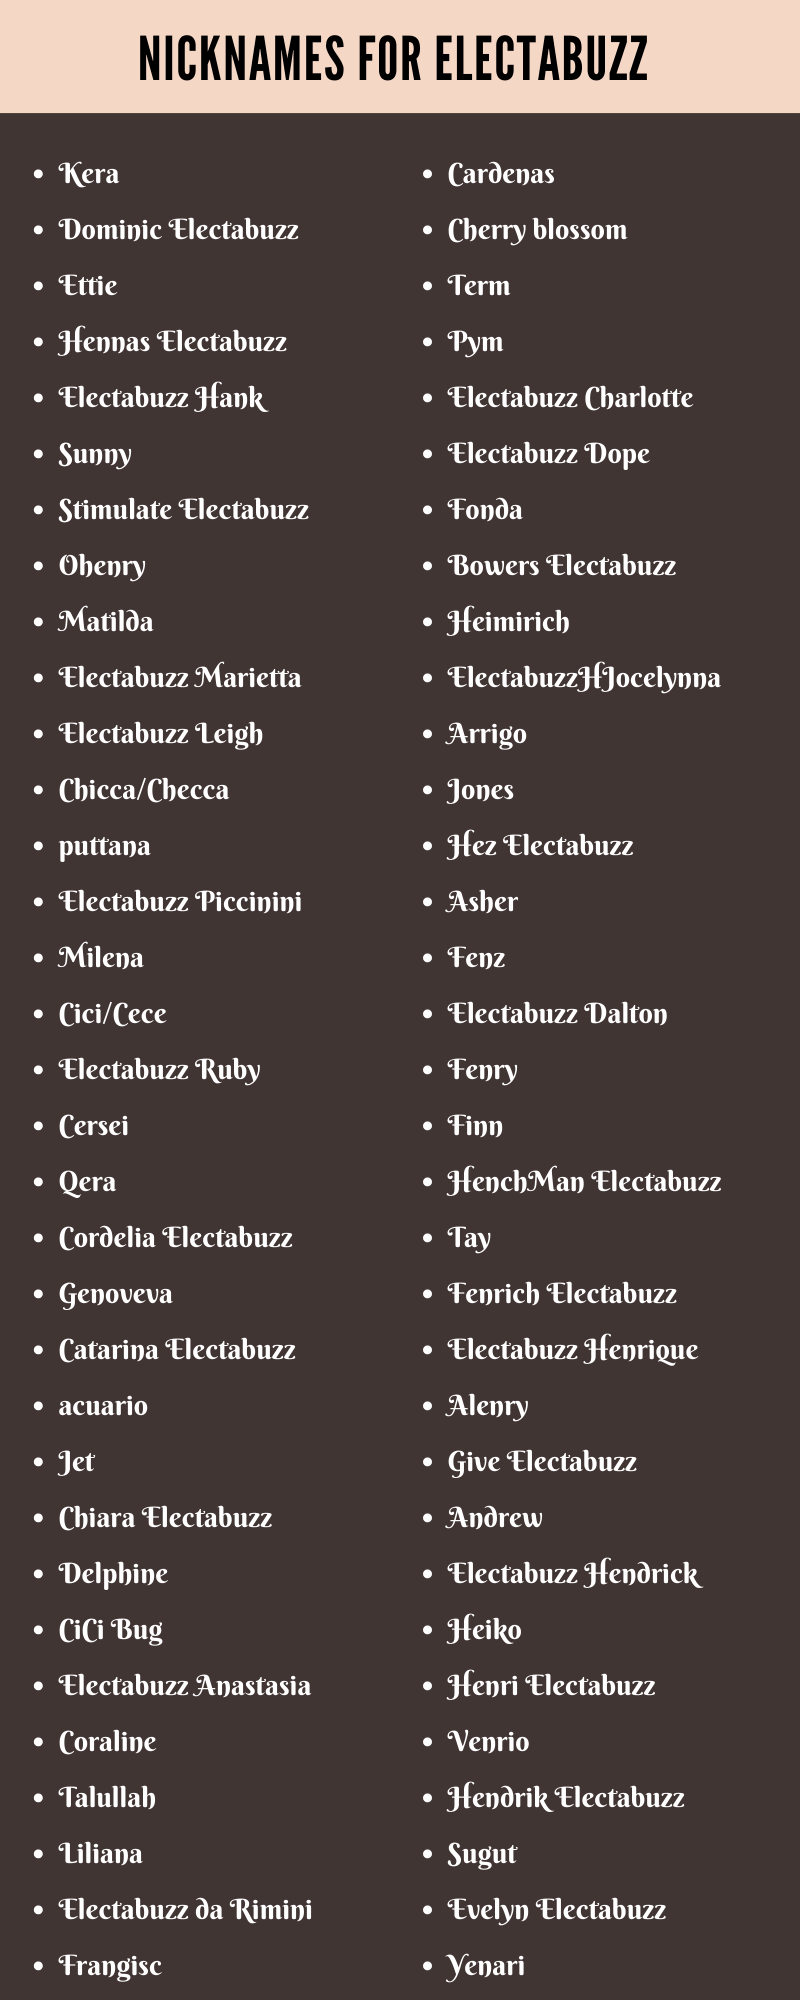 Nicknames For Electabuzz